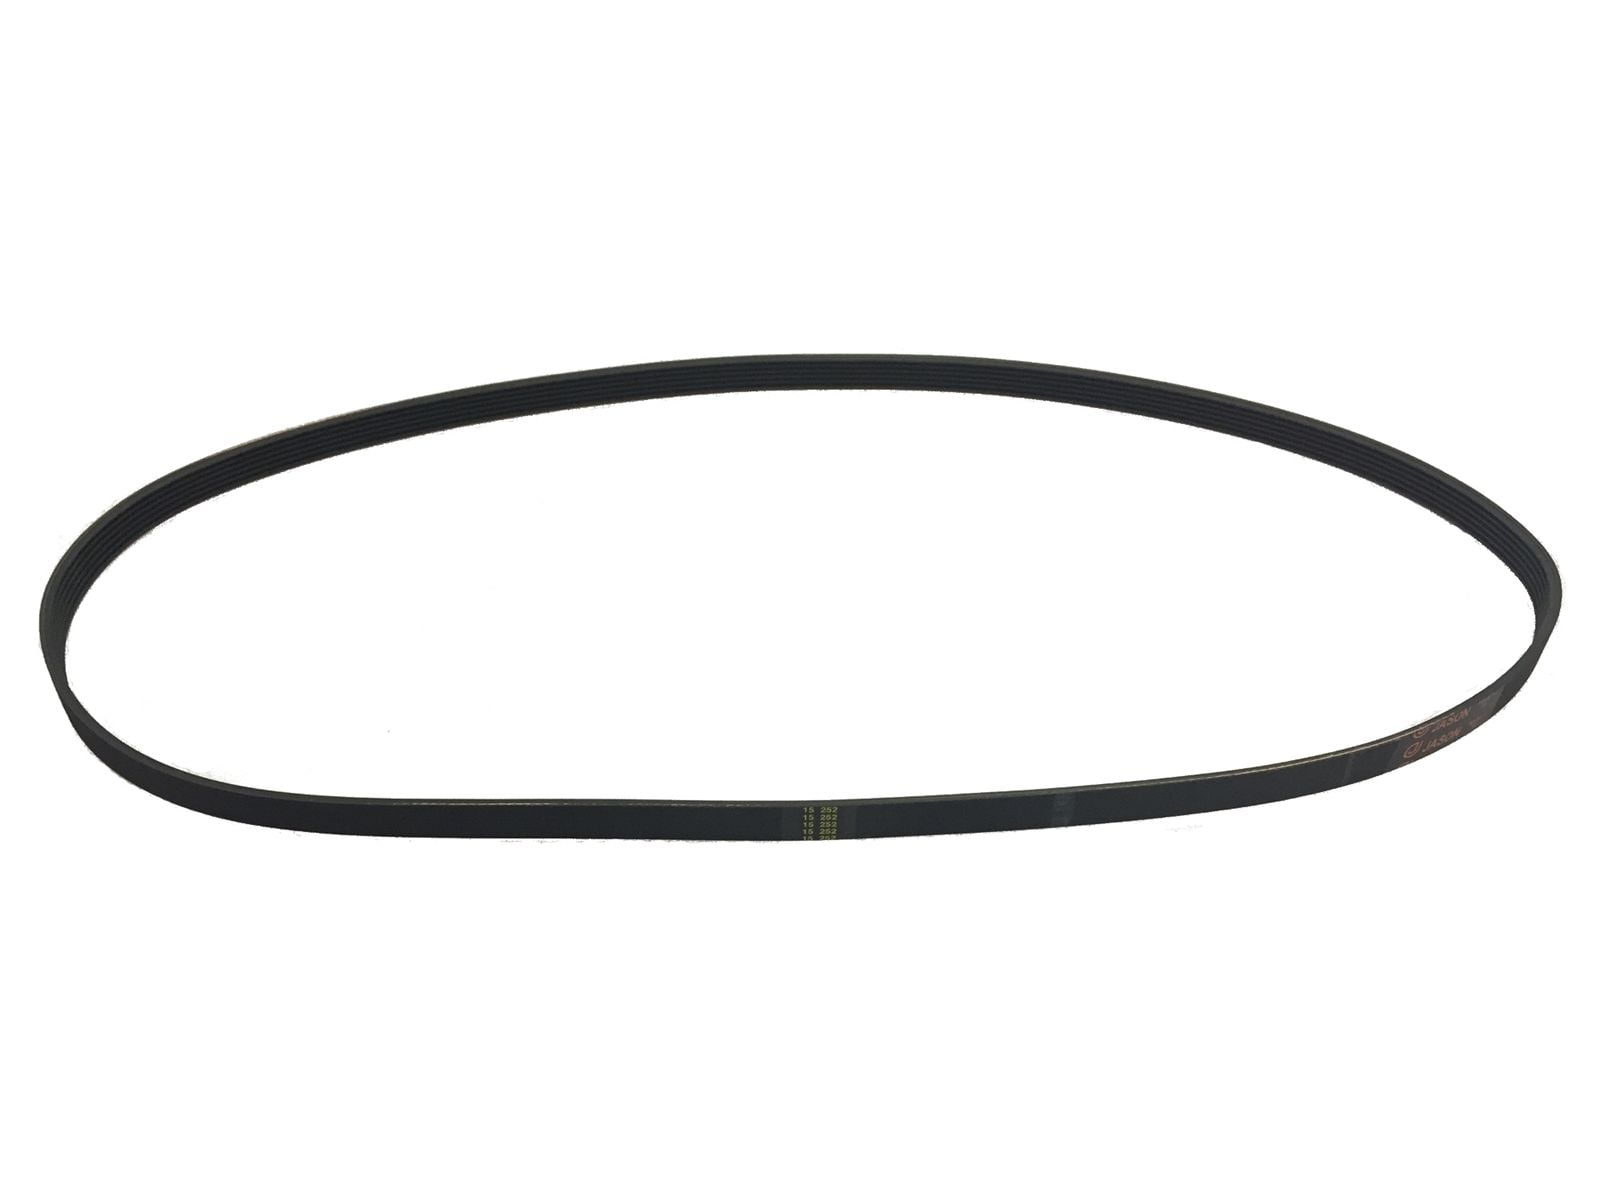 N011005 Air Compressor Belt Replacement A12210 Craftsman DeVilbiss Porter Cable 